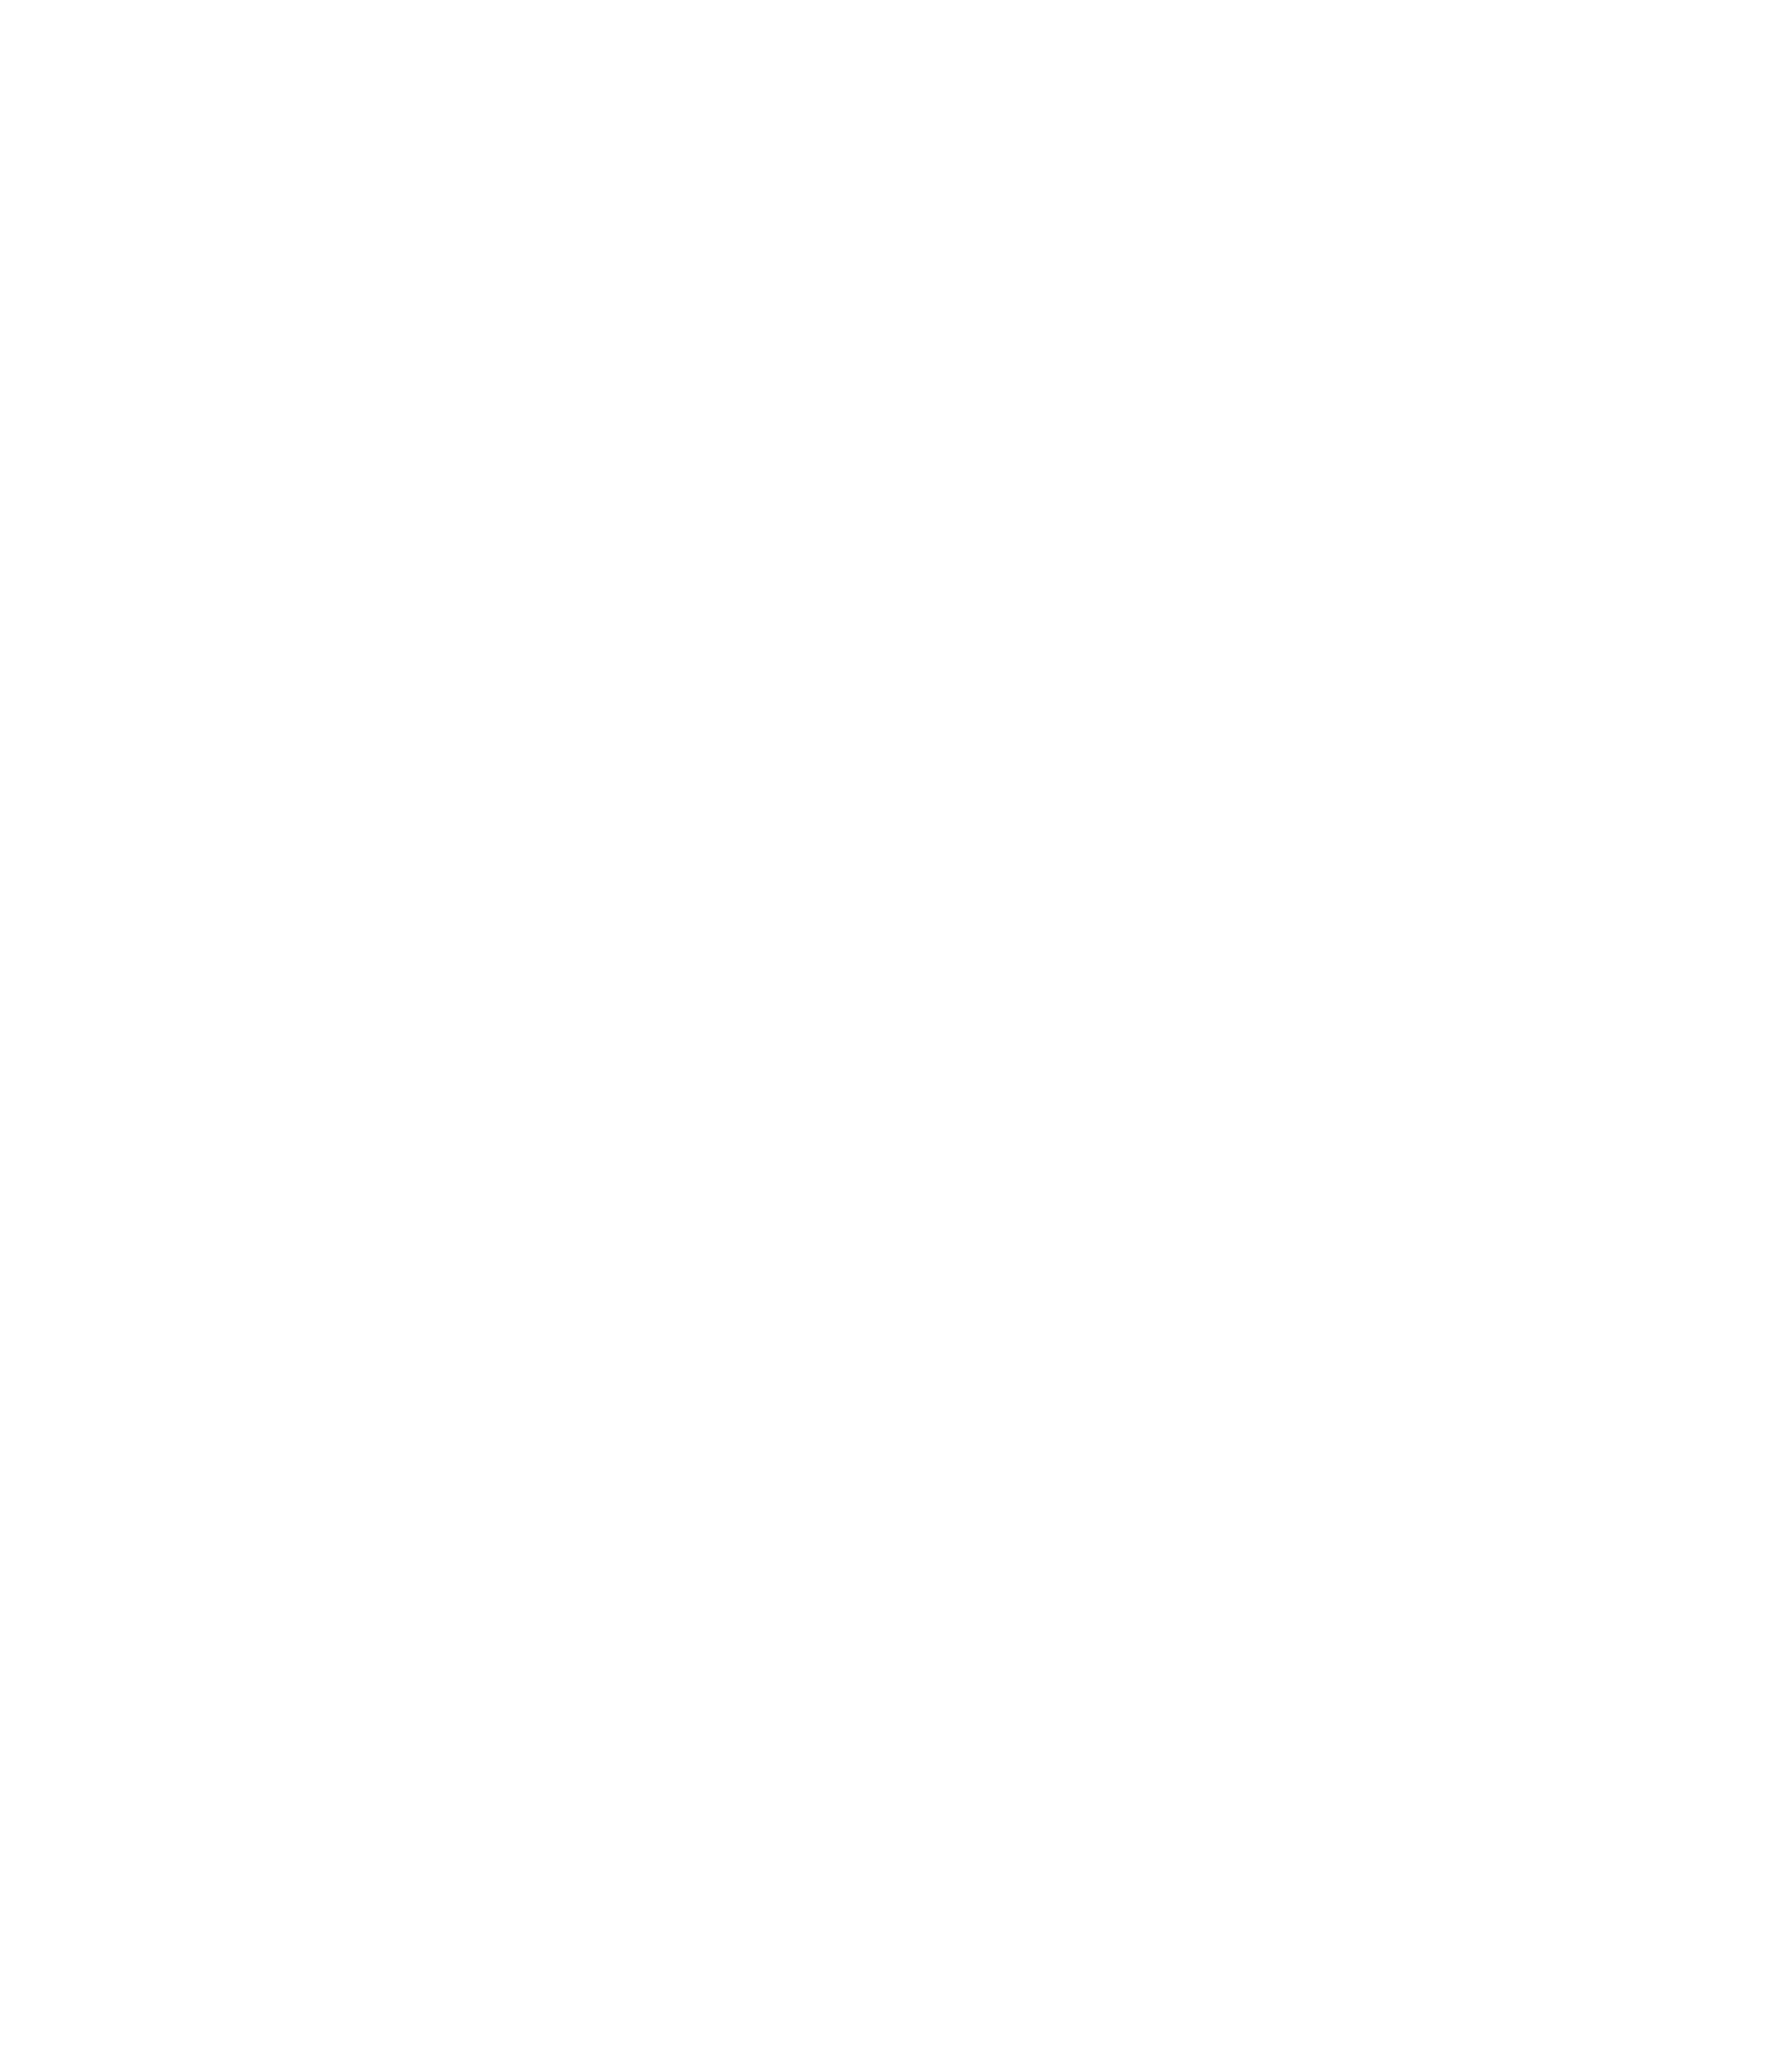 //browarka.pl/wp-content/uploads/2017/08/jablkowa_warka_logo_pion_black_pozytyw.png